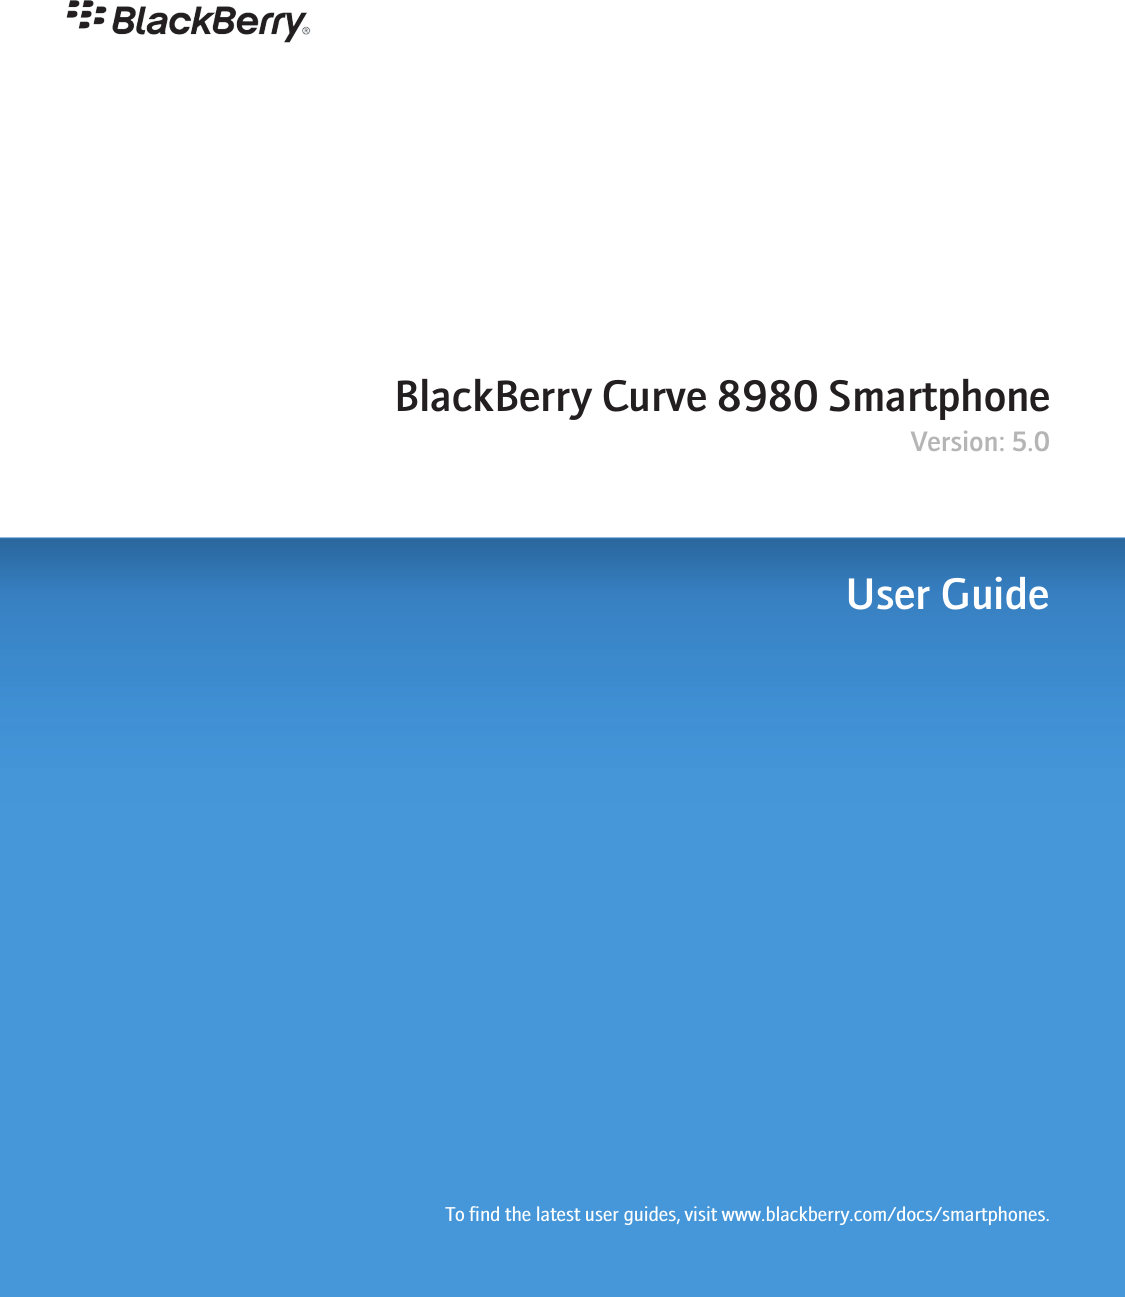 BlackBerry Curve 8980 SmartphoneVersion: 5.0User GuideTo find the latest user guides, visit www.blackberry.com/docs/smartphones.